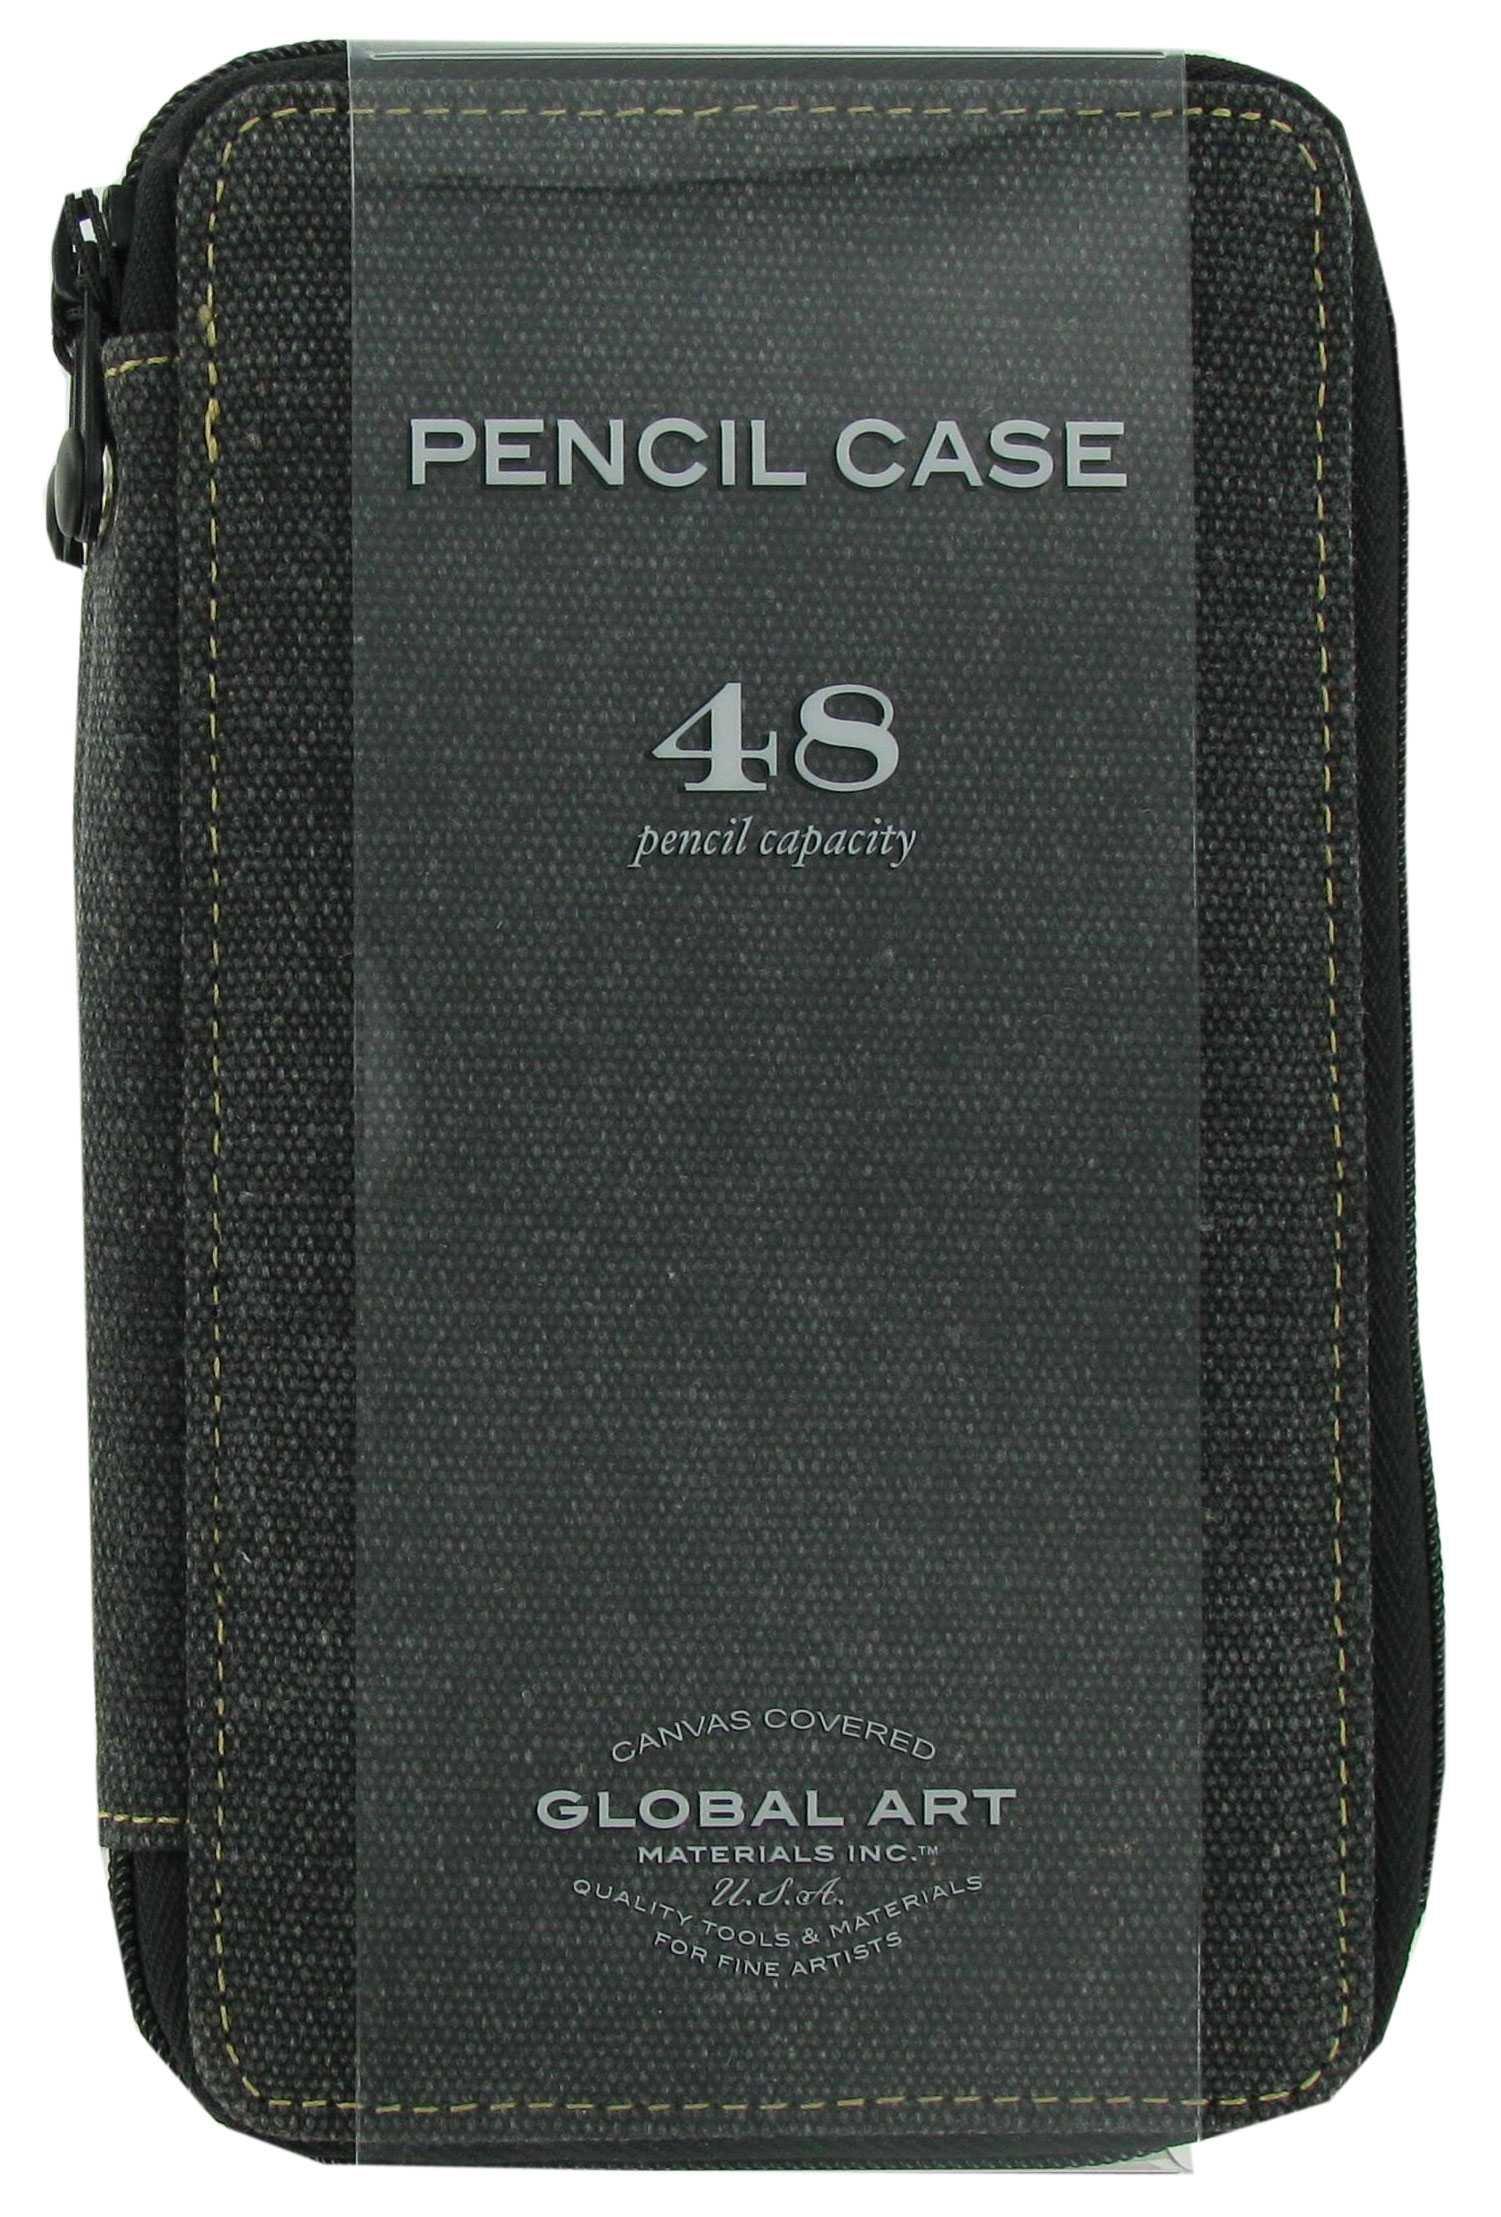 Global Art Canvas Pencil Roll Up Case - Black